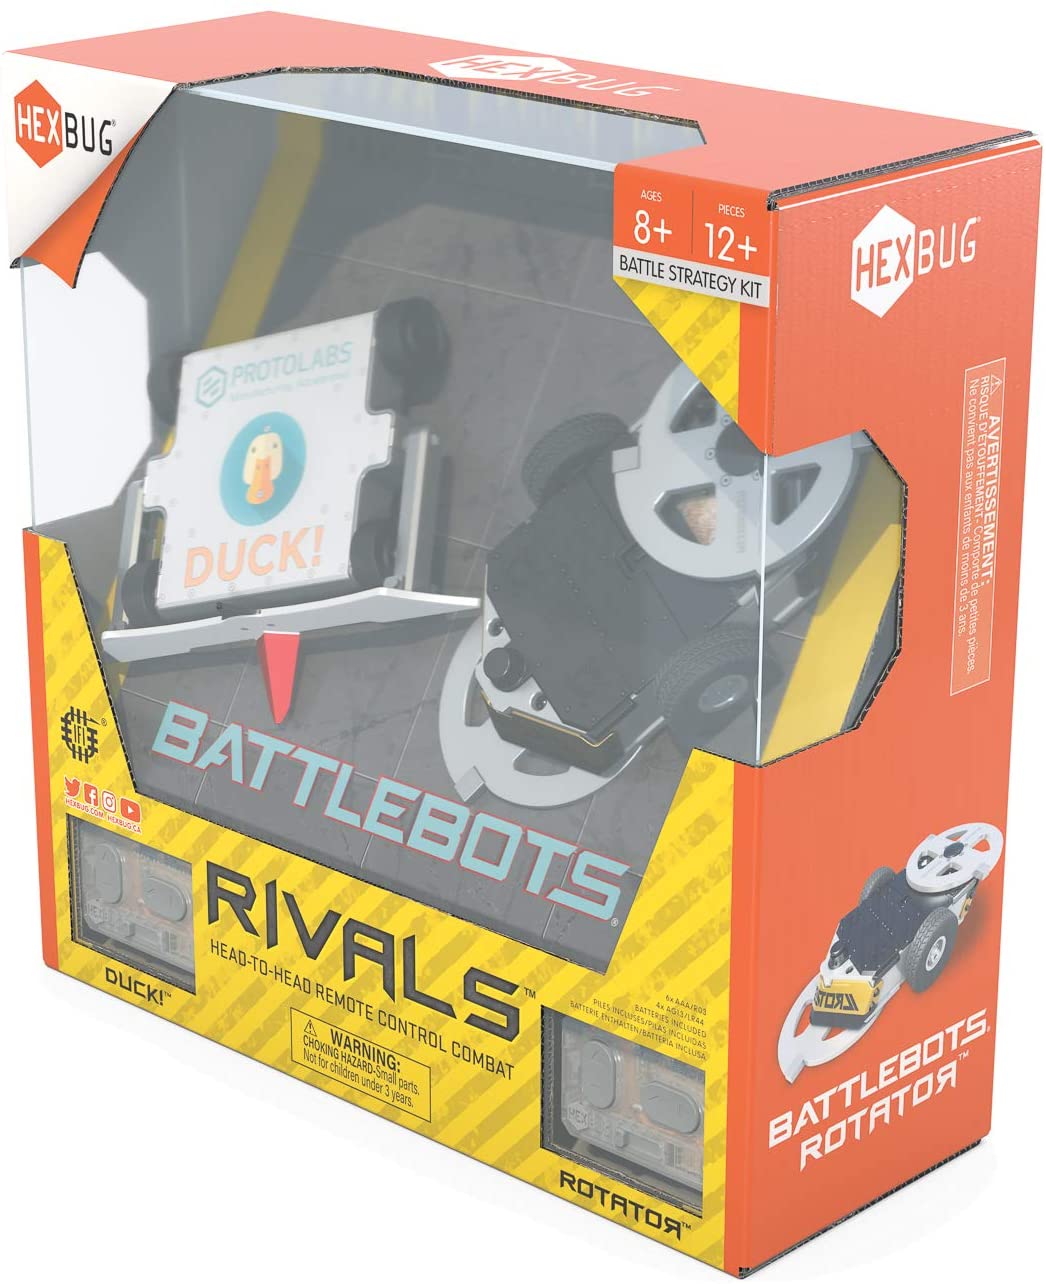 HEXBUG BattleBots Rivals 5.0 (Rotator and Duck!) Toys for Kids - Fun Battle Bot